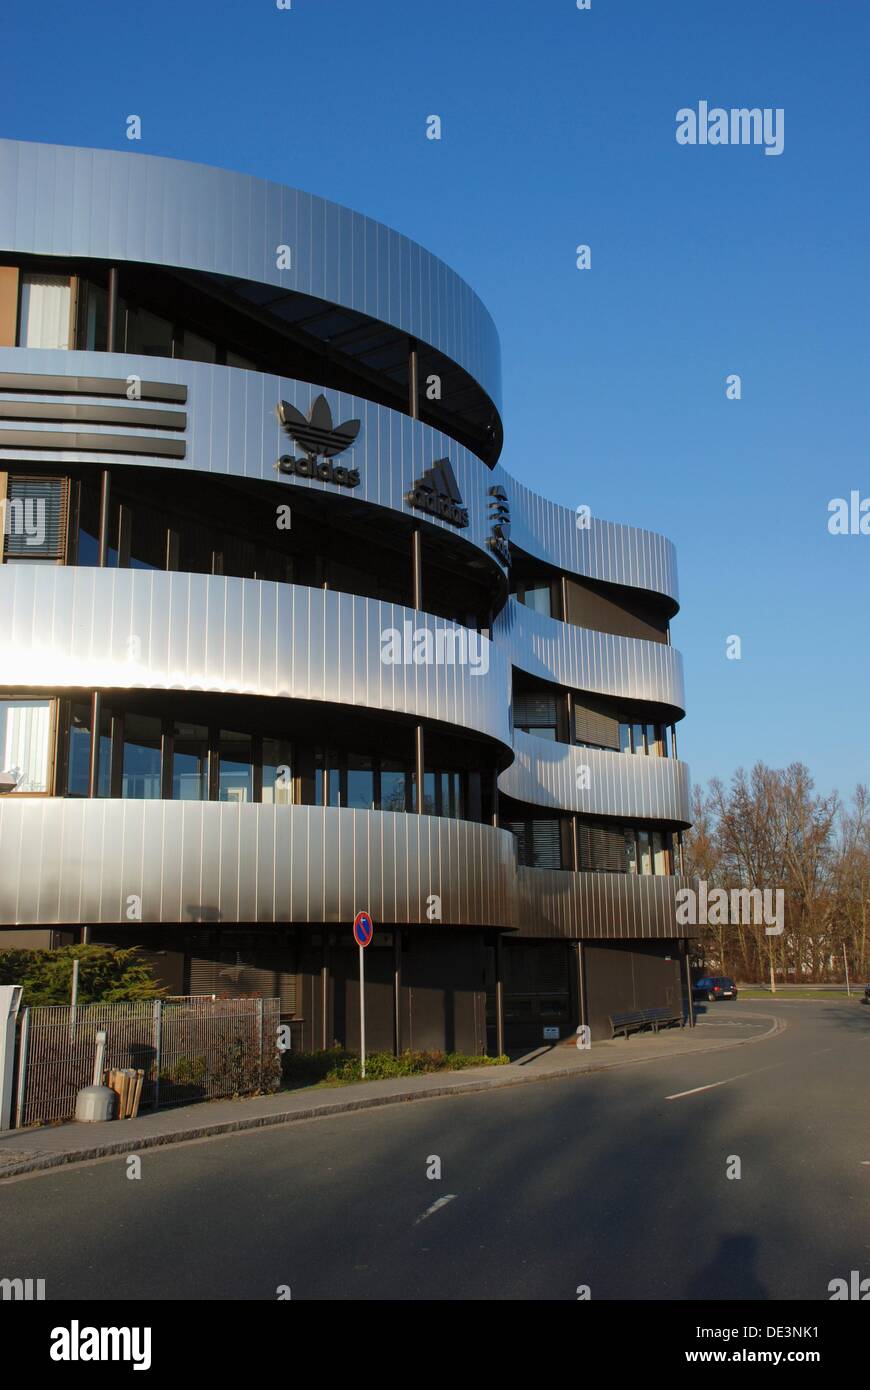 Adidas headquarters -Fotos und -Bildmaterial in hoher Auflösung – Alamy